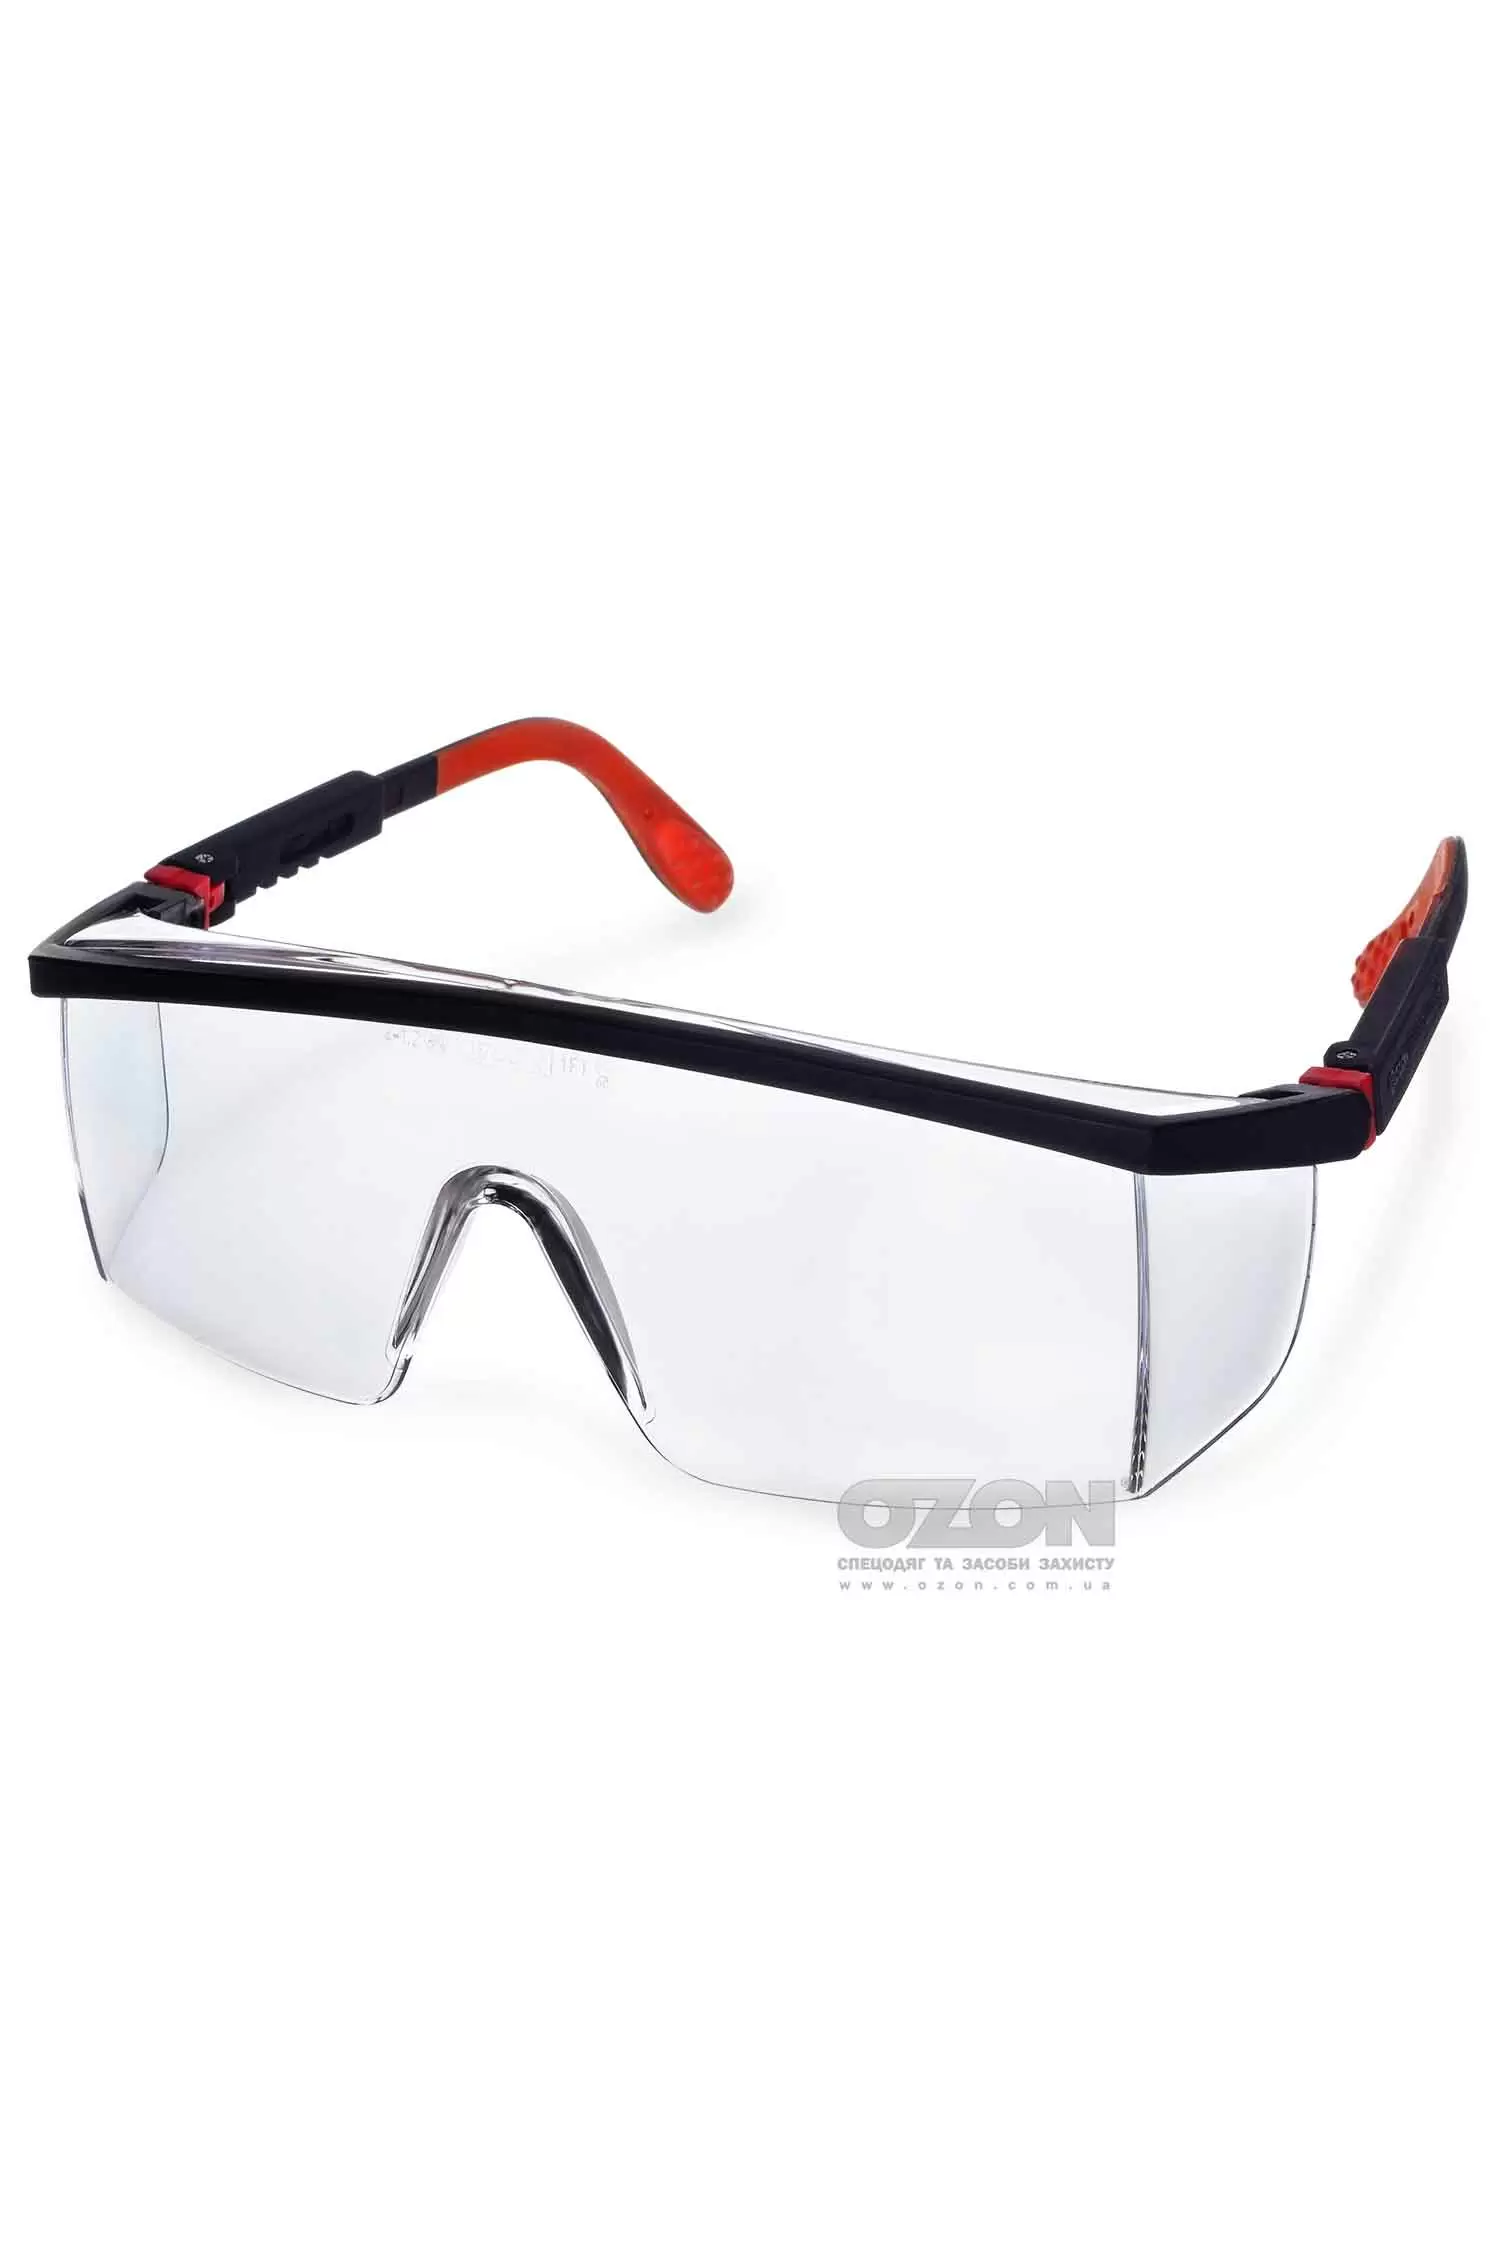 Защитные очки OZON™ Комфорт® 7-013 - Фото 1